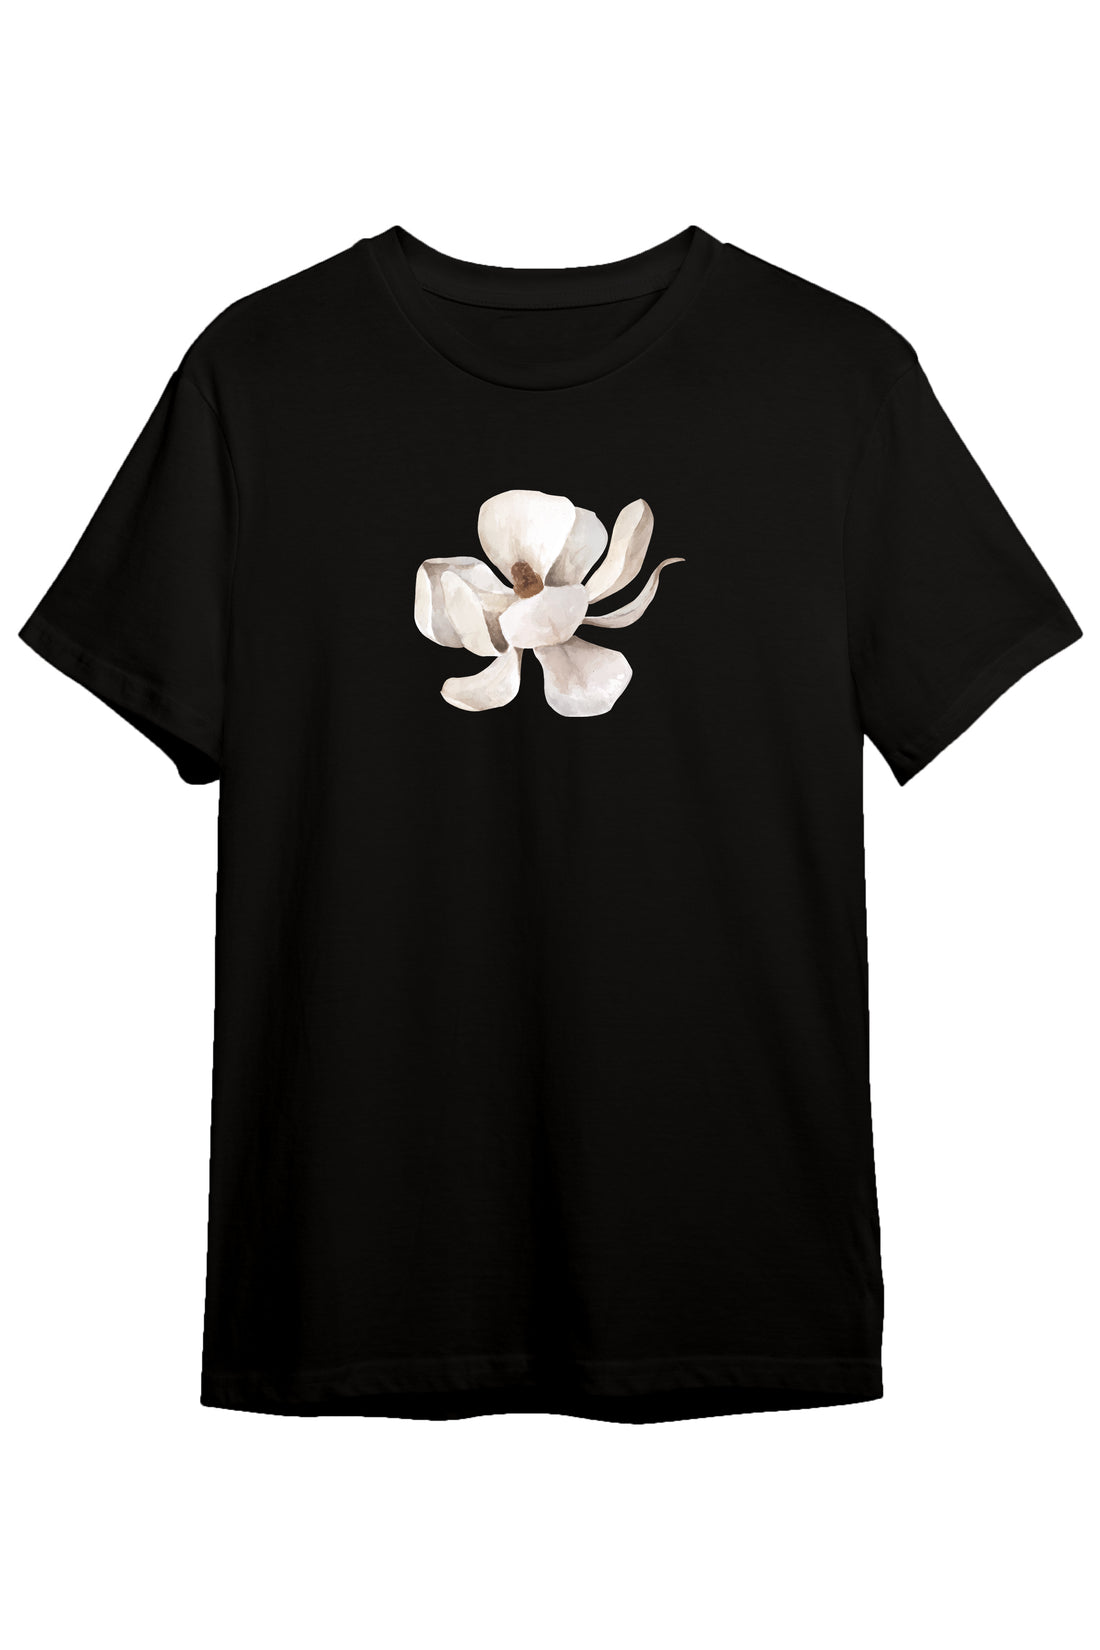 Magnolia - Regular Tshirt